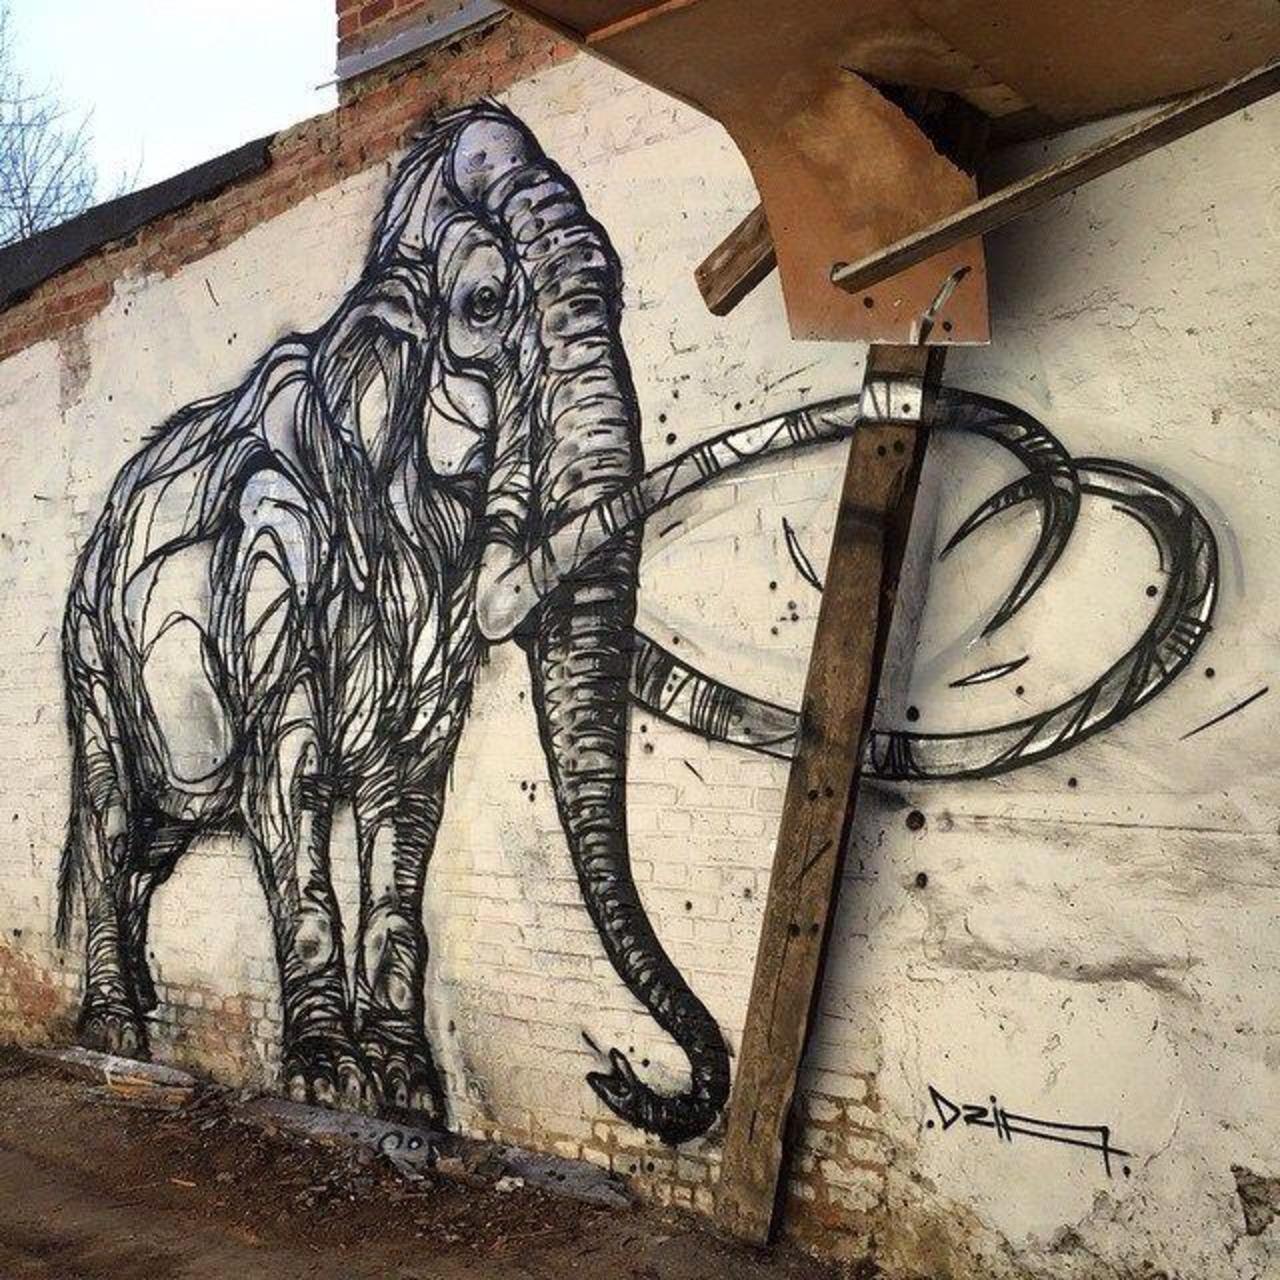 Mammoth. New nature in Street Art wall by DZIA 

#art #graffiti #mural #streetart http://t.co/AWxwUeKPIl